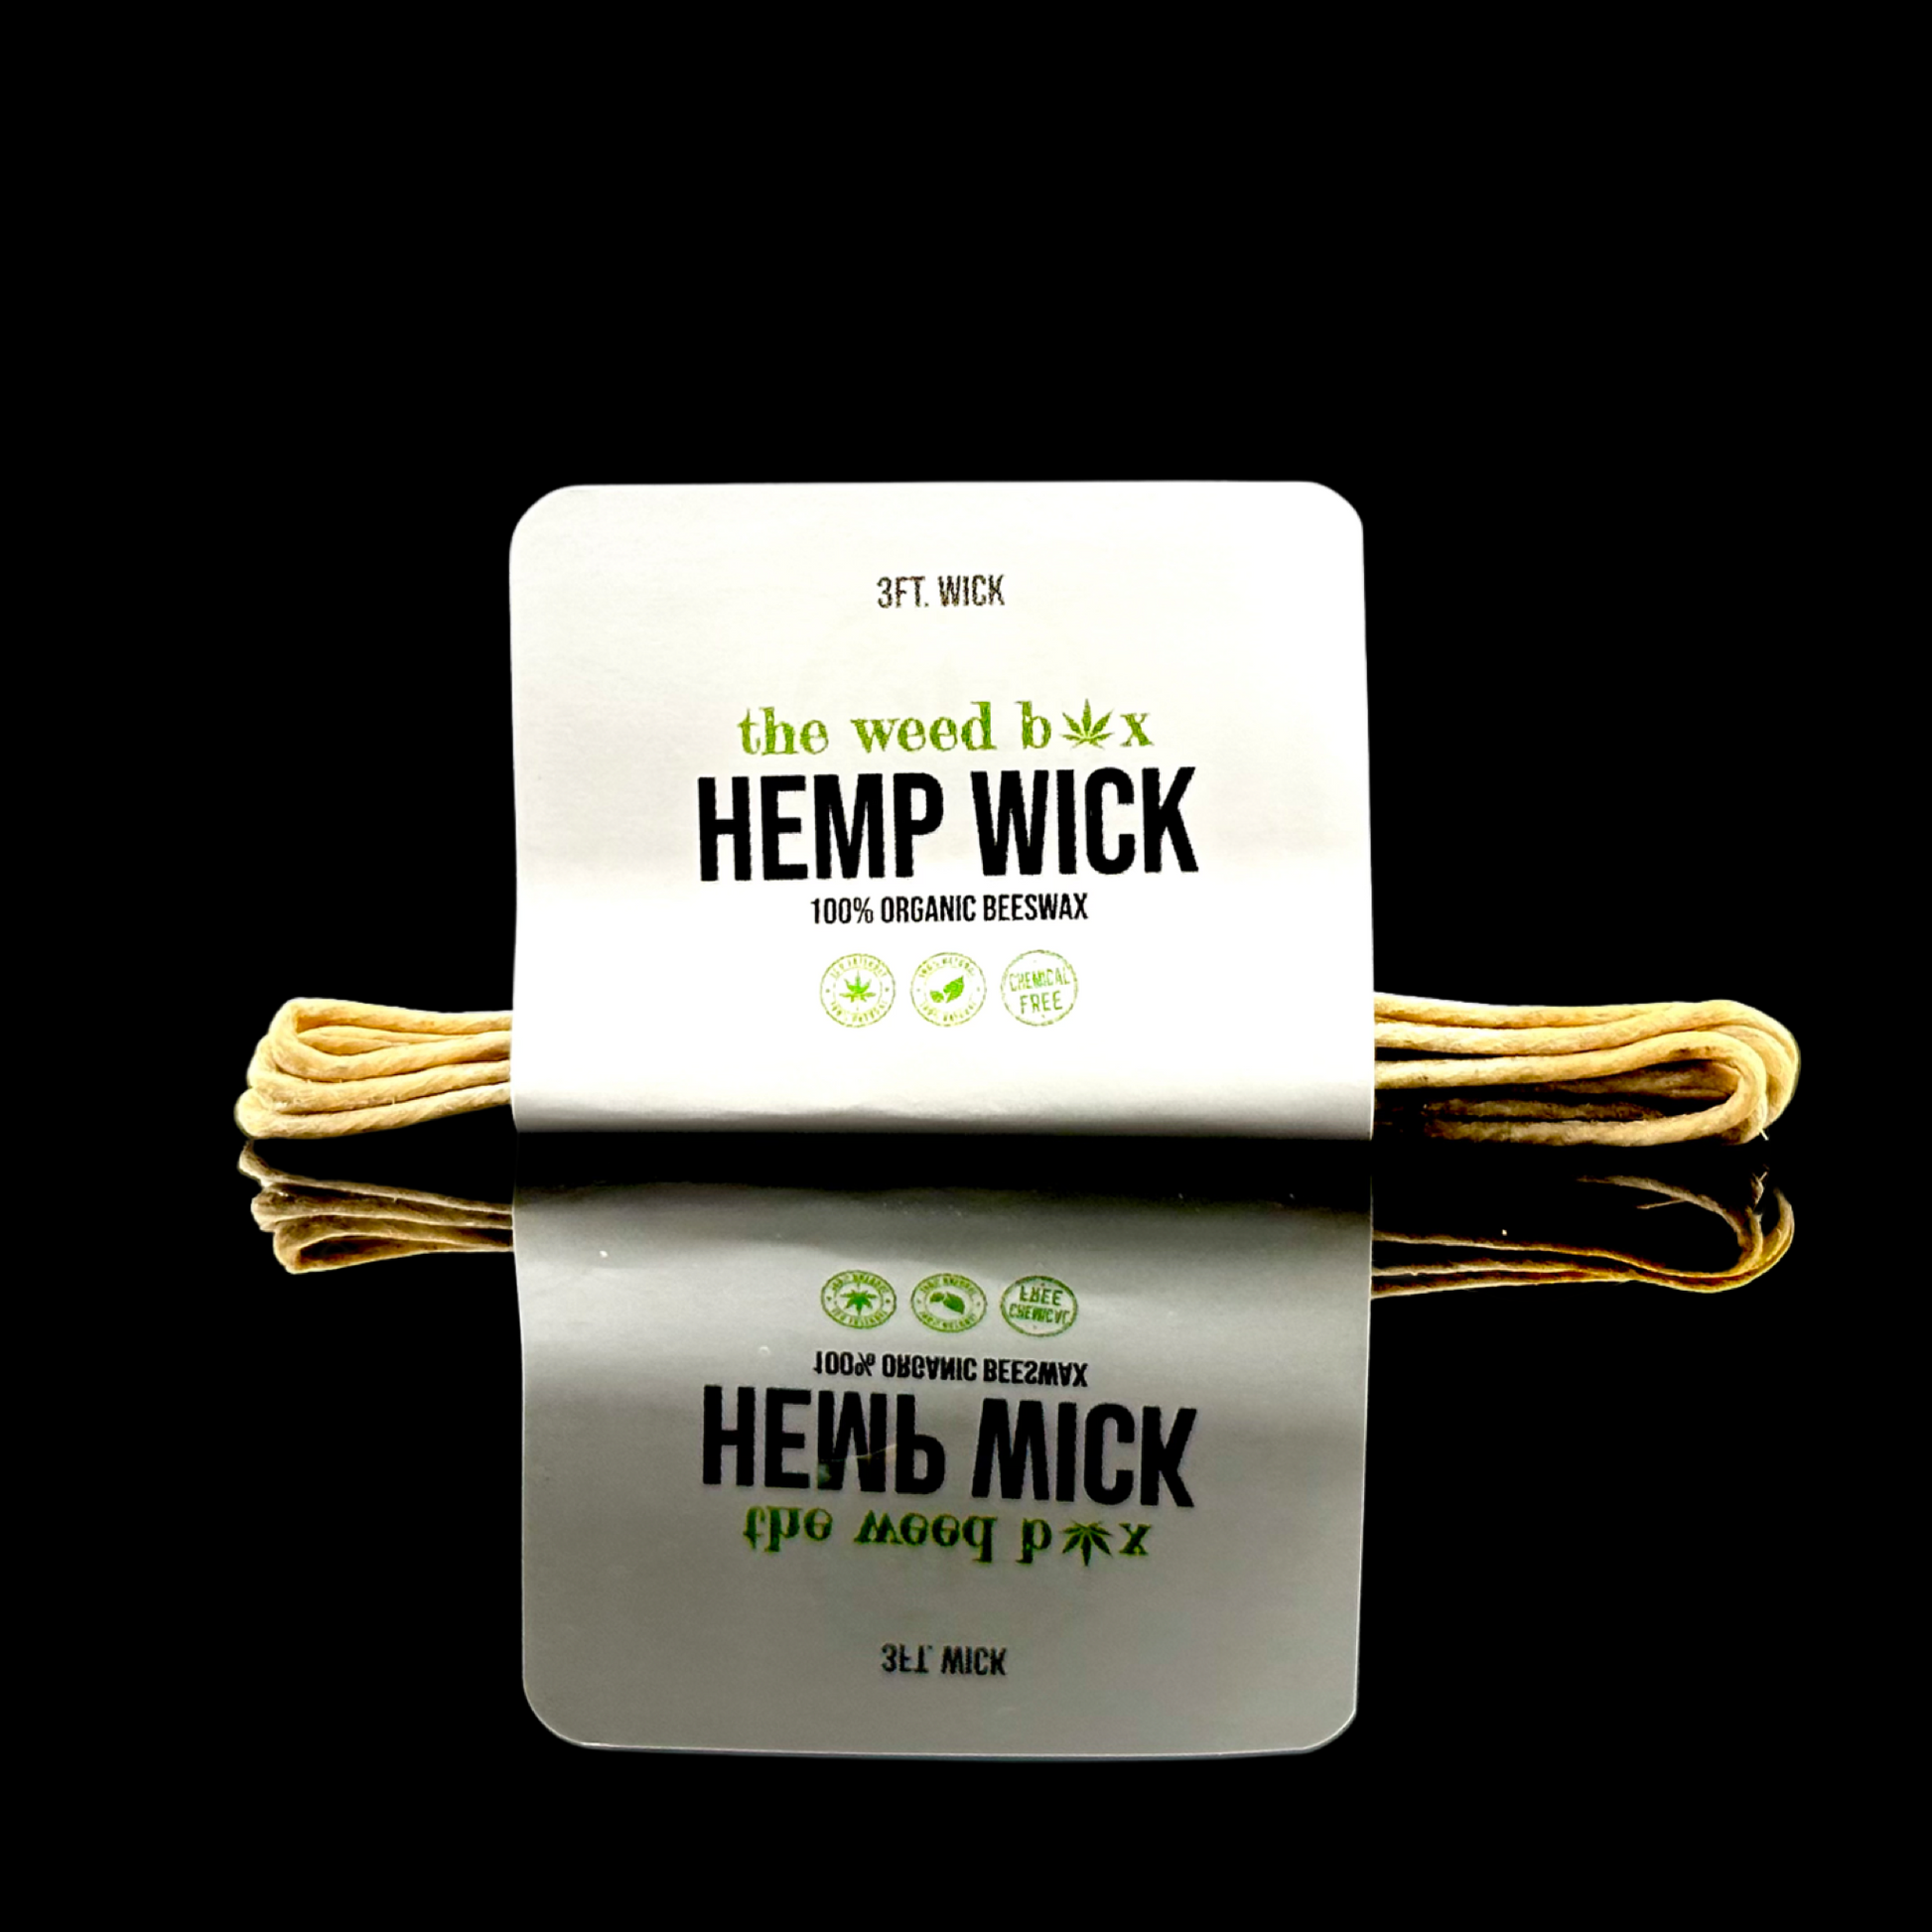 RAW Organic Hemp Wicks to Light Joints Quantity 1 unit Length 3m